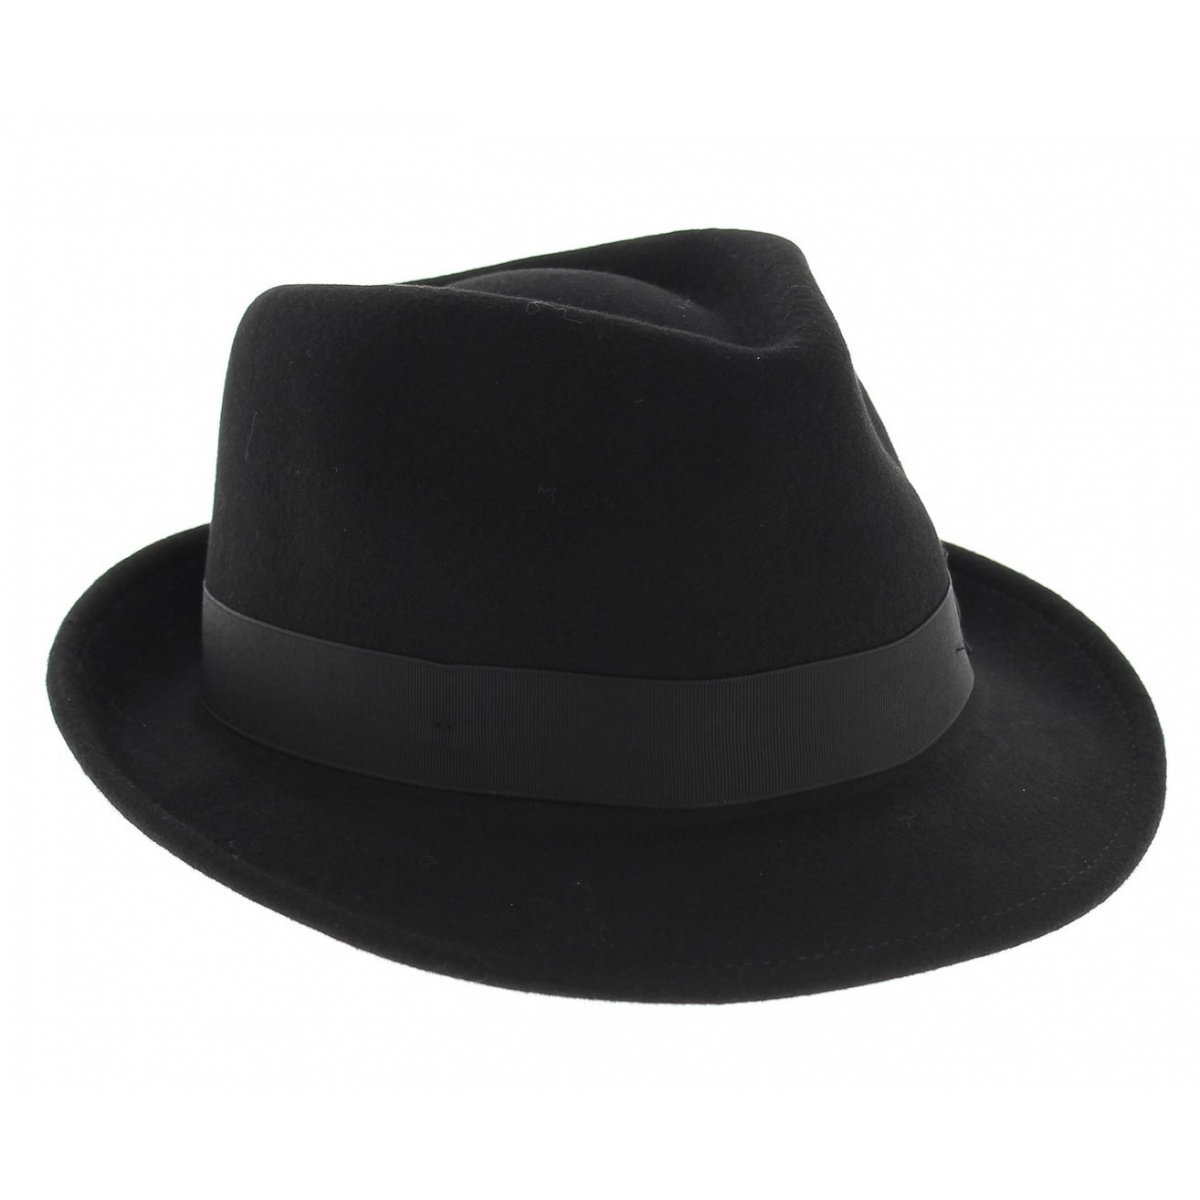 Elkader trilby hat - Stetson Reference : 1847 Chapellerie